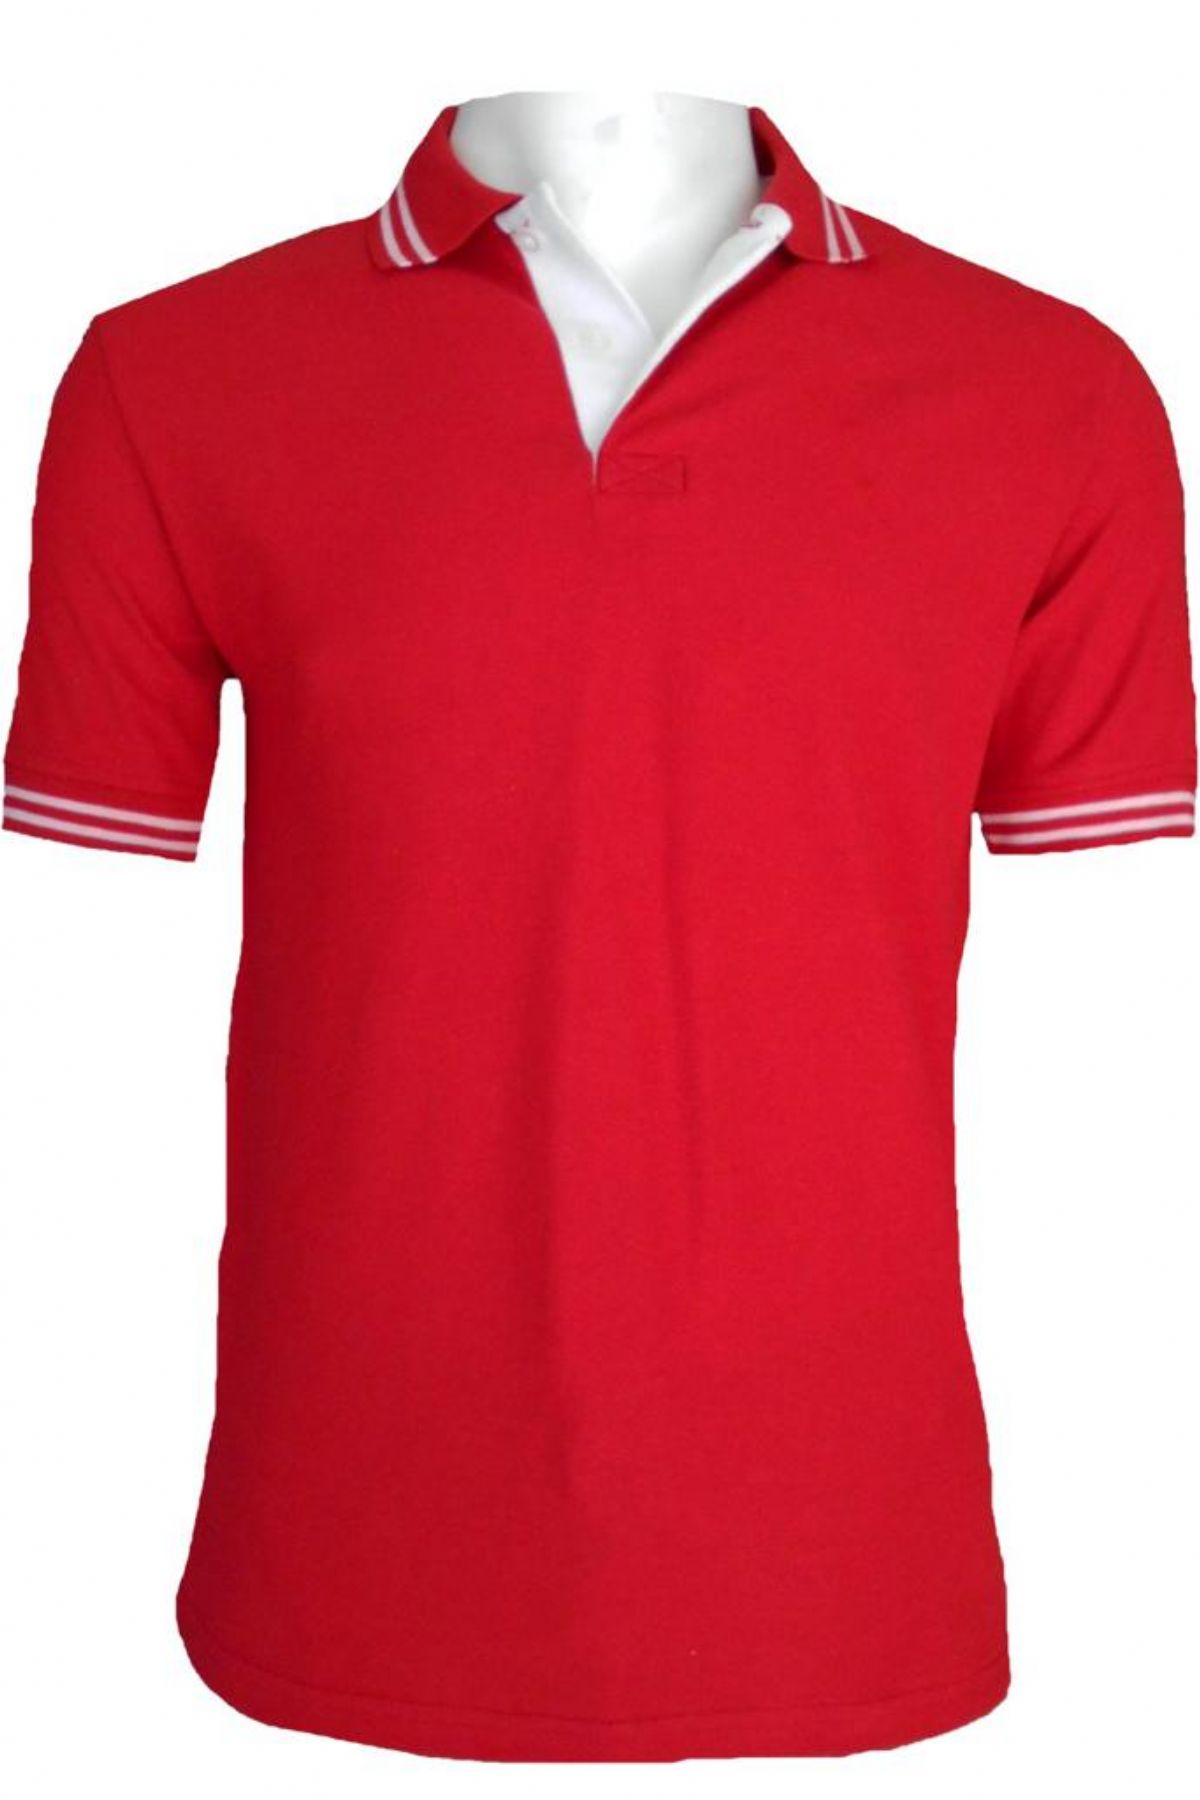 Lacoste T-shirt Kırmızı Renk Kol Bantlı